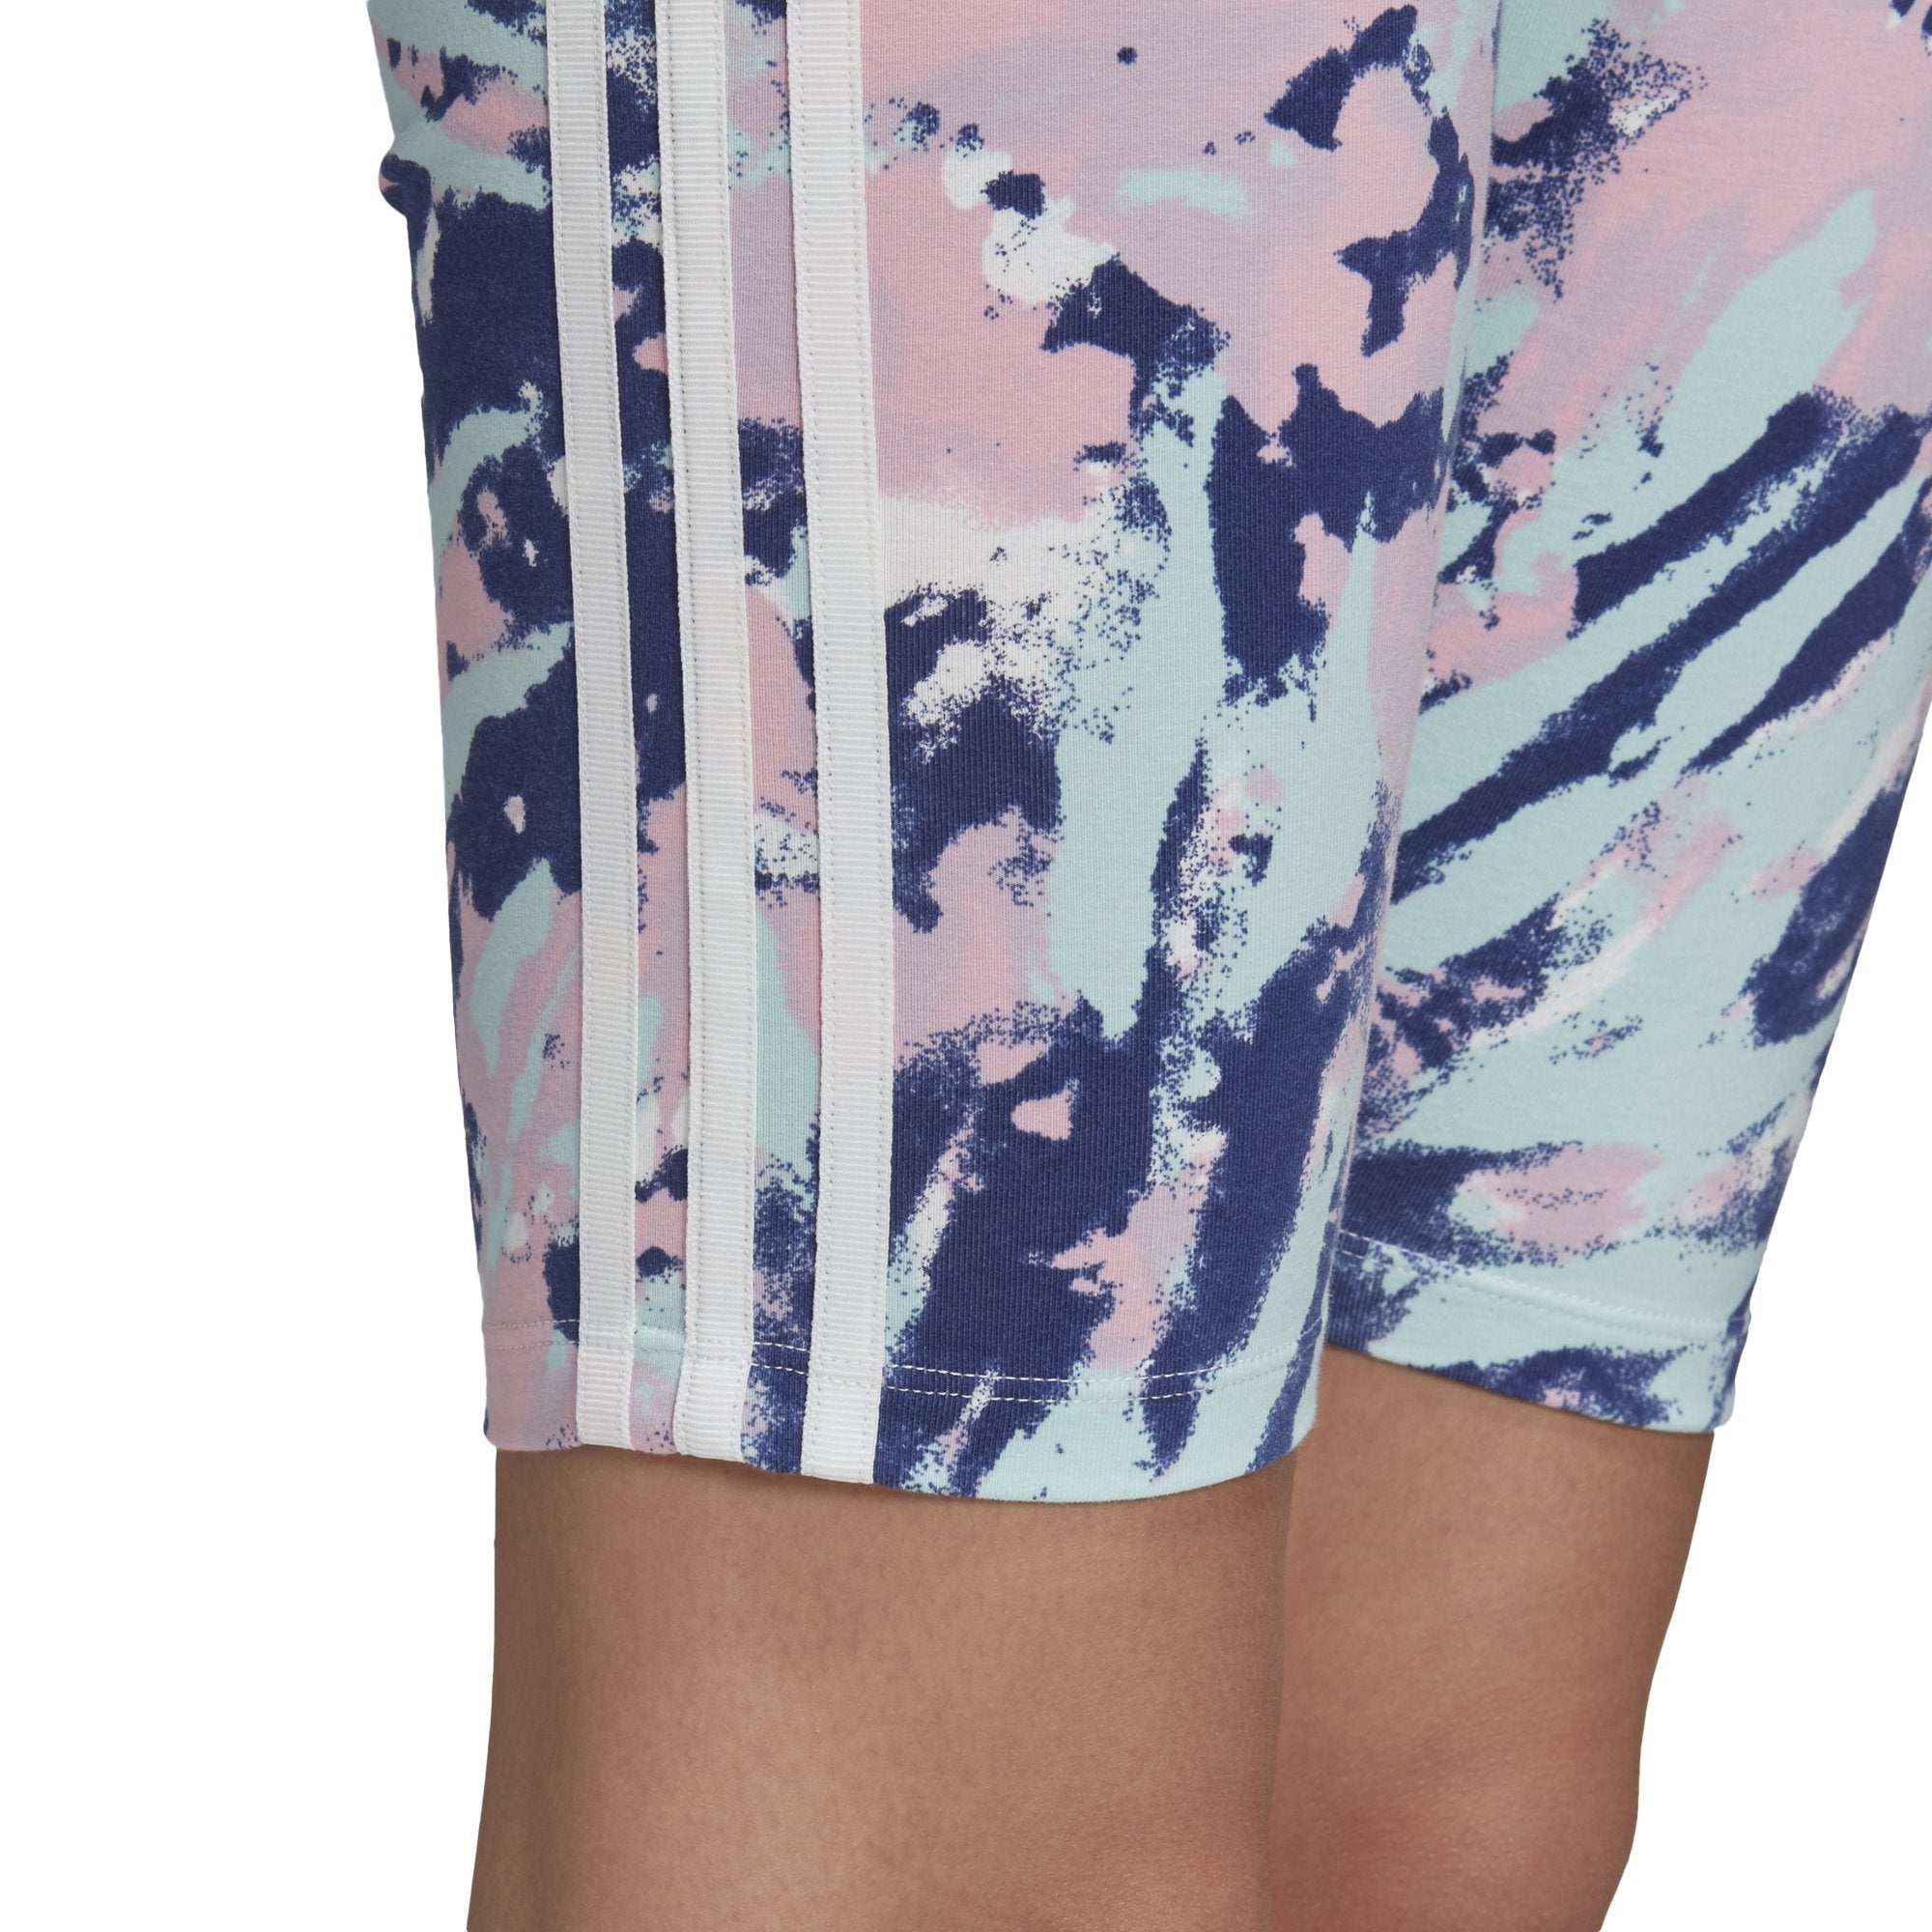 Adidas Originals Short Tight Tie Dye Vapour Blue Pink Women GL6350 - SHORTS - Erlebniswelt-fliegenfischenShops - Canada